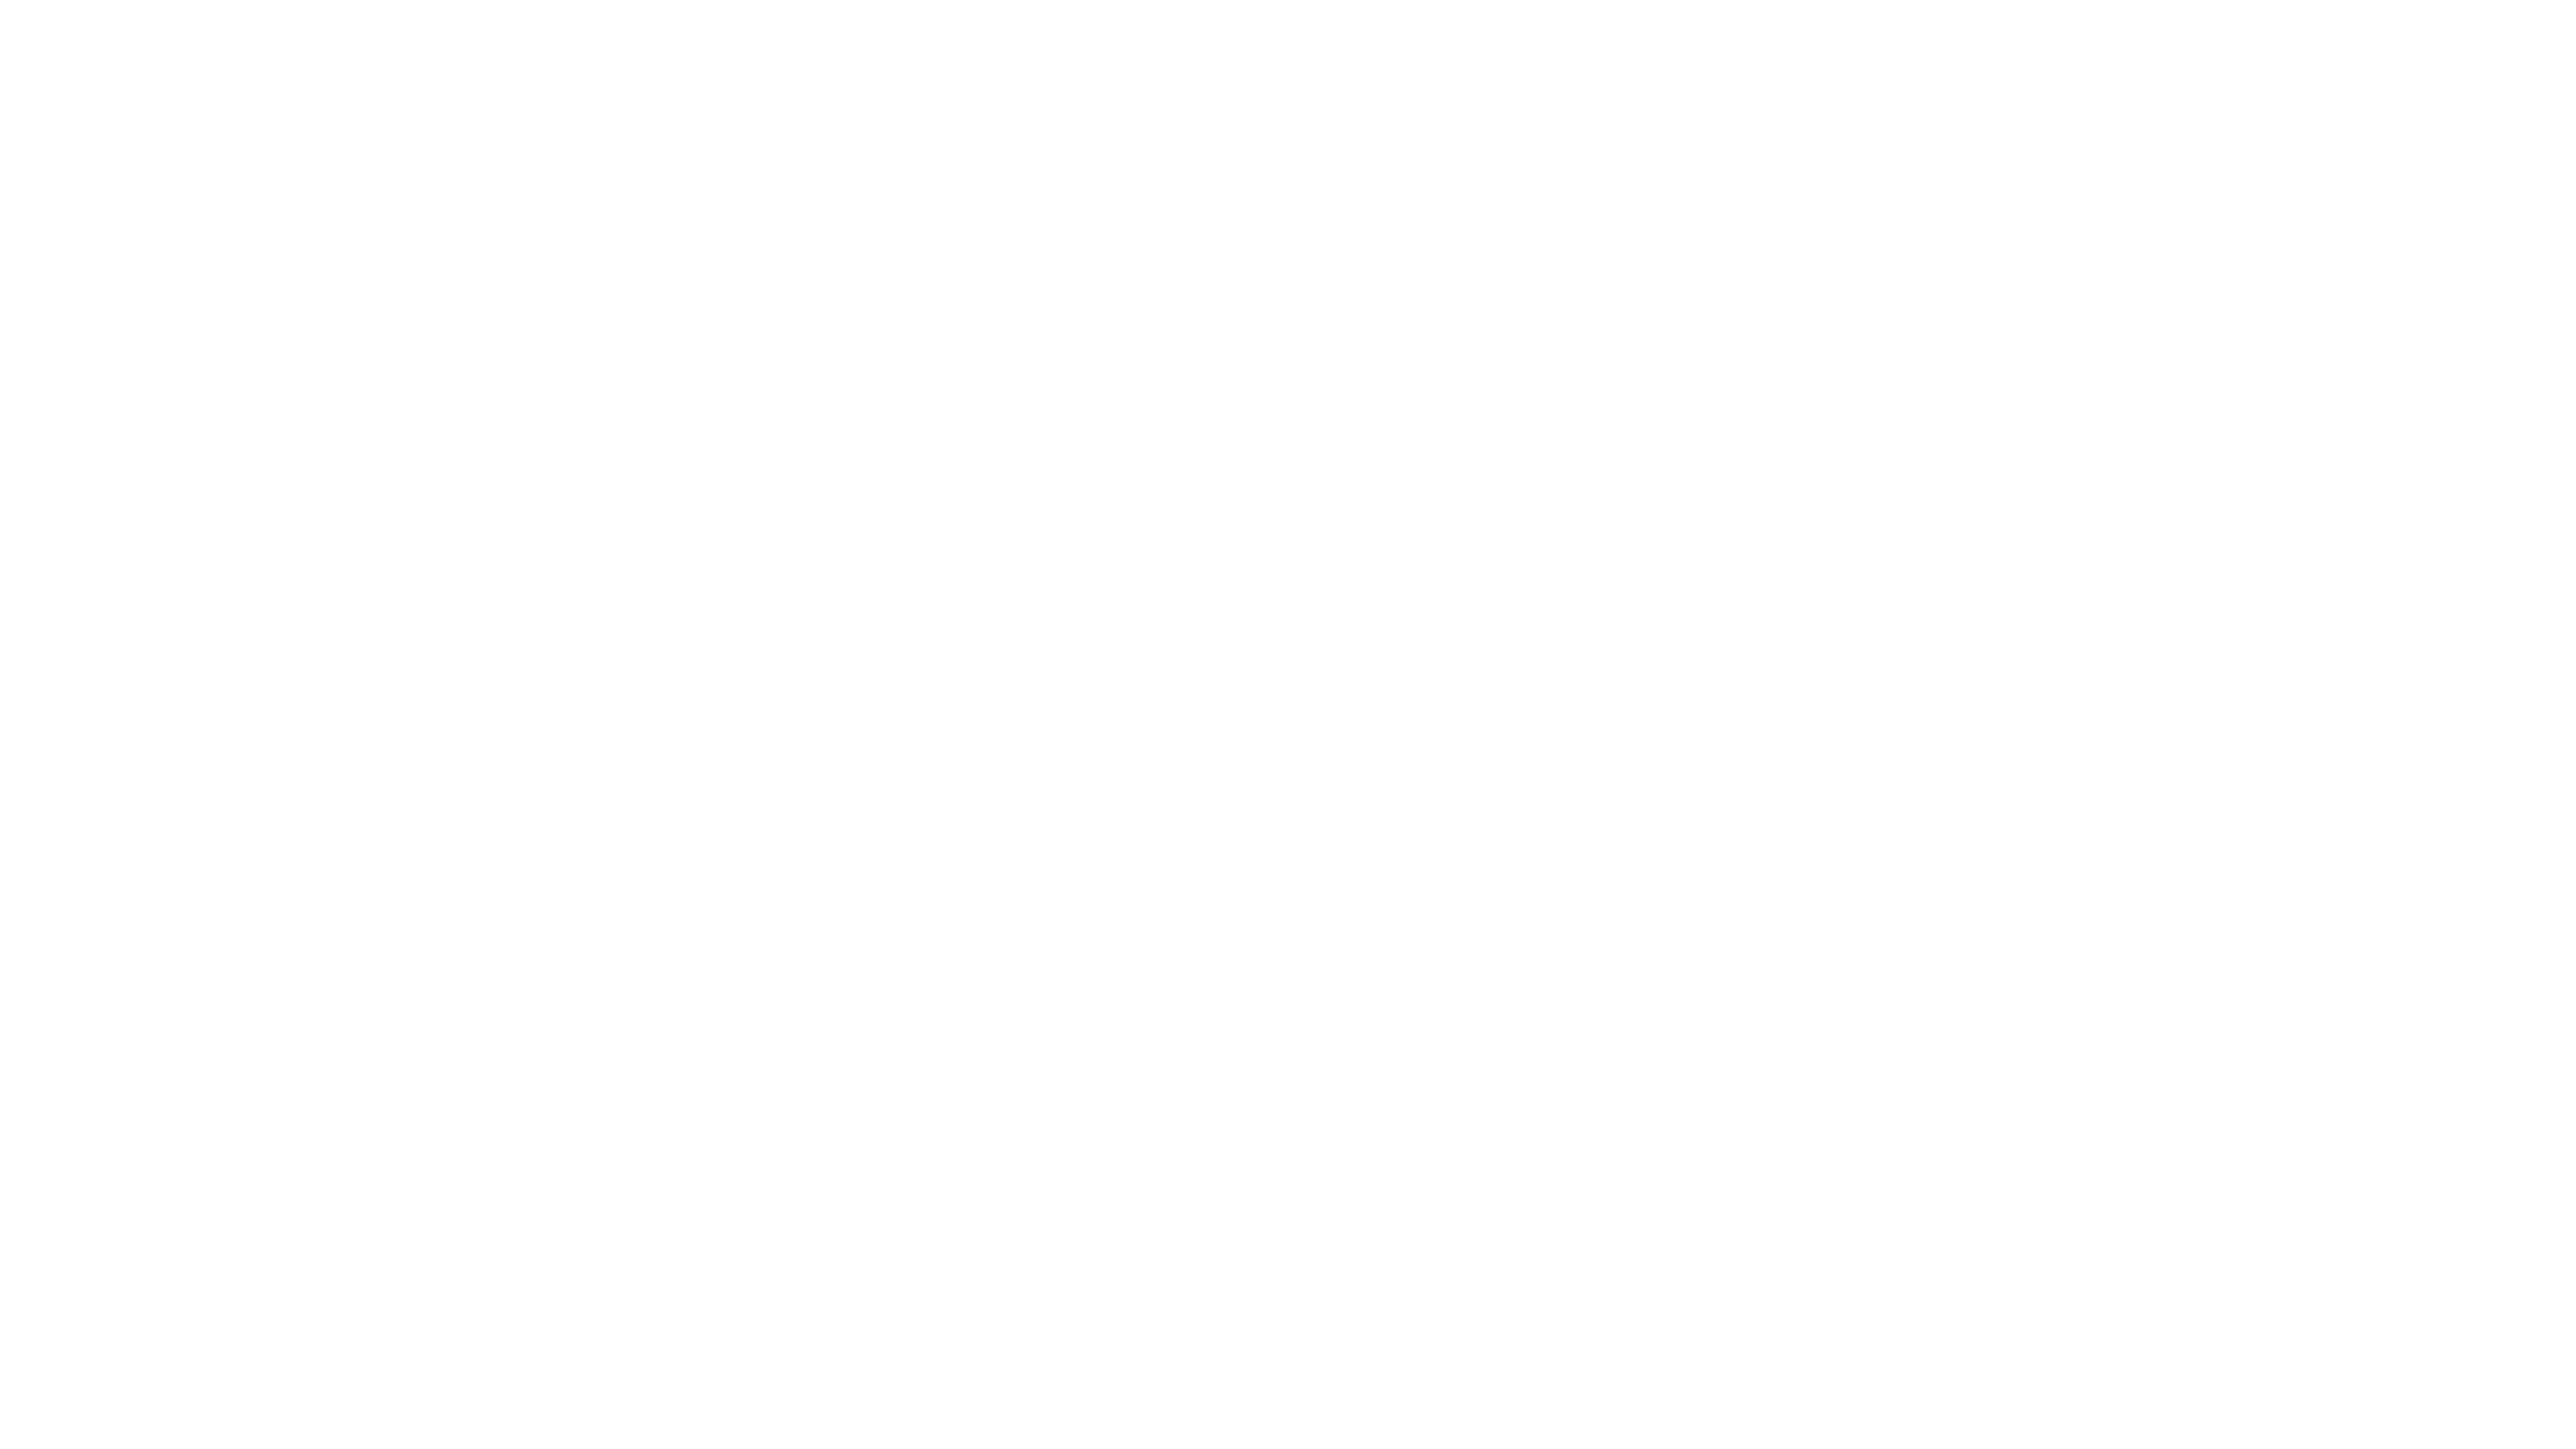 HQ_HotelCampus_Combi_HC+HQ_Neg